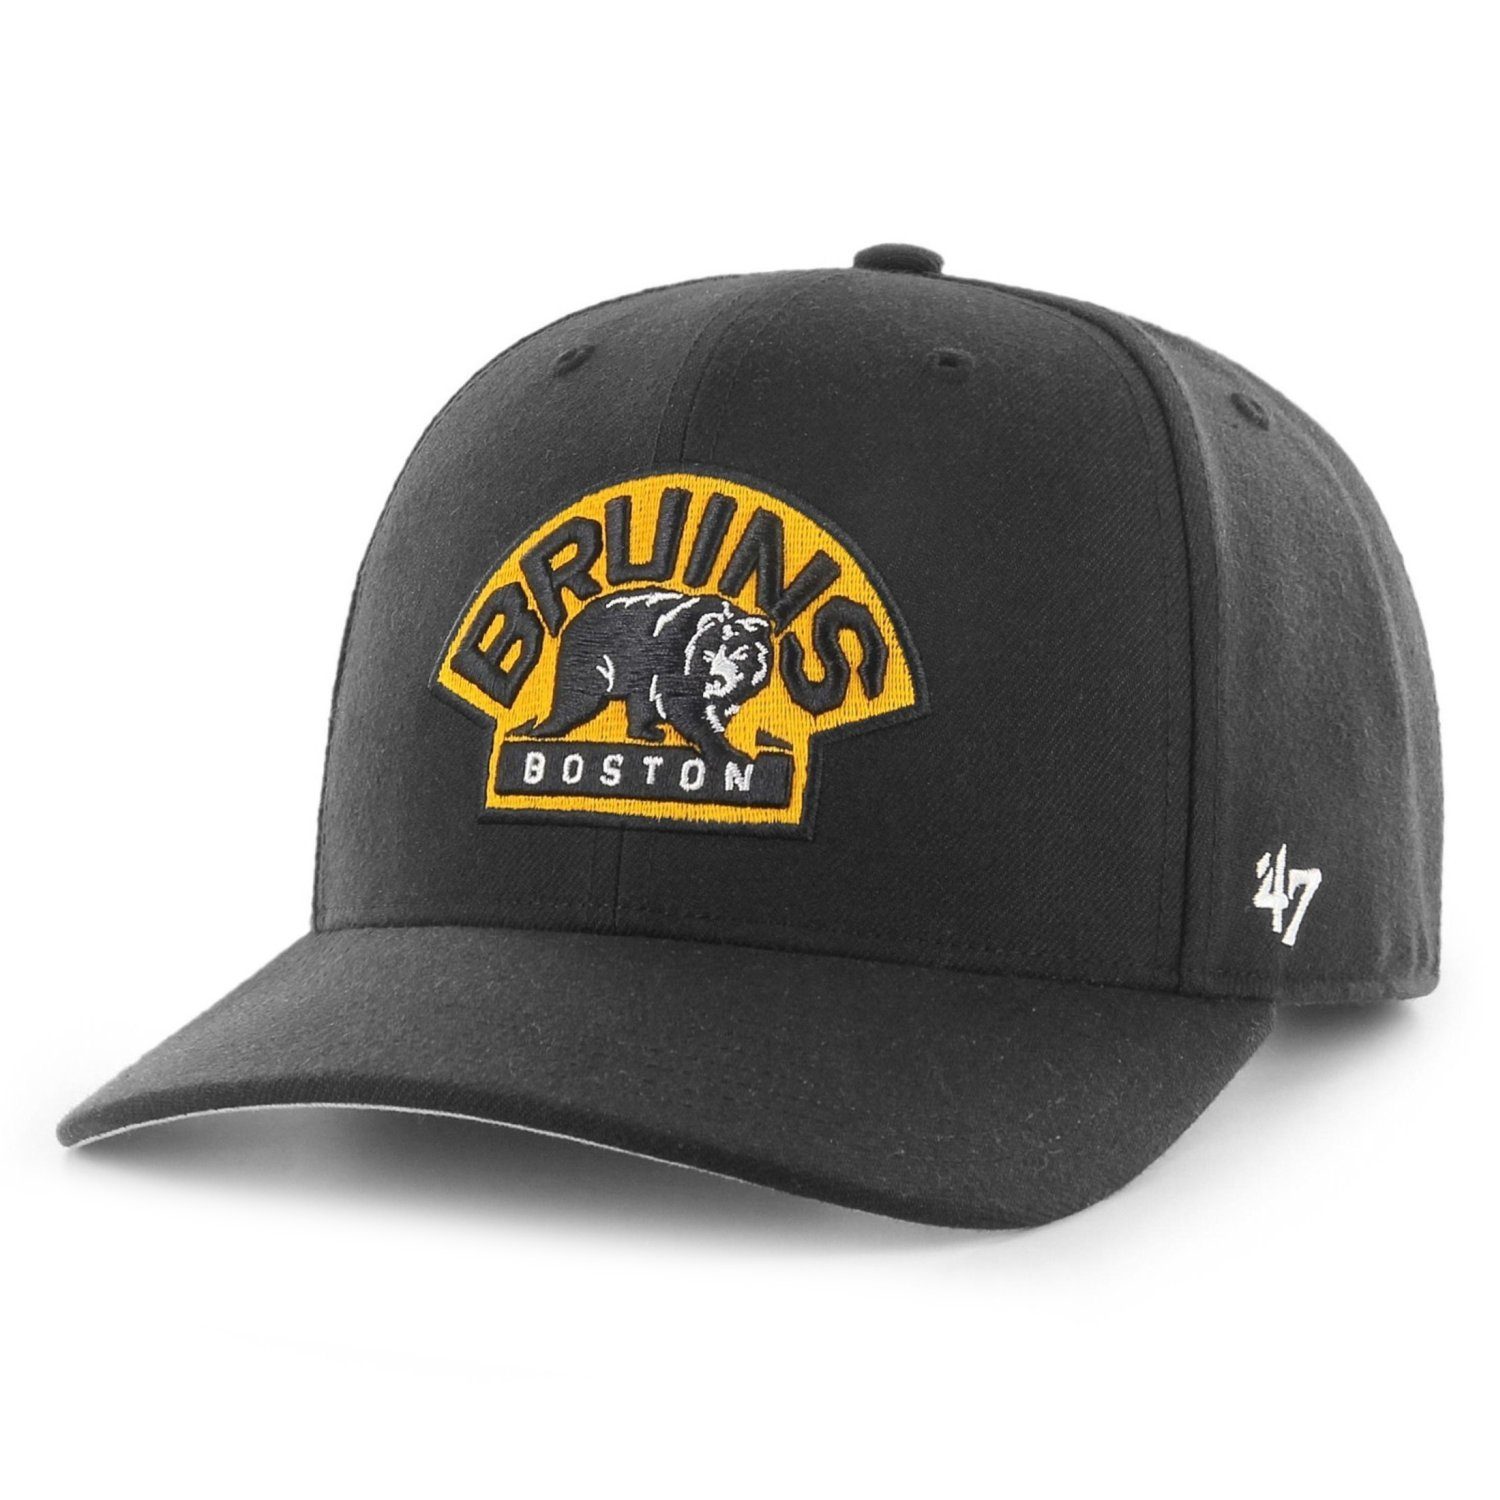 Low Brand Baseball '47 Cap ZONE Bruins Boston Profile